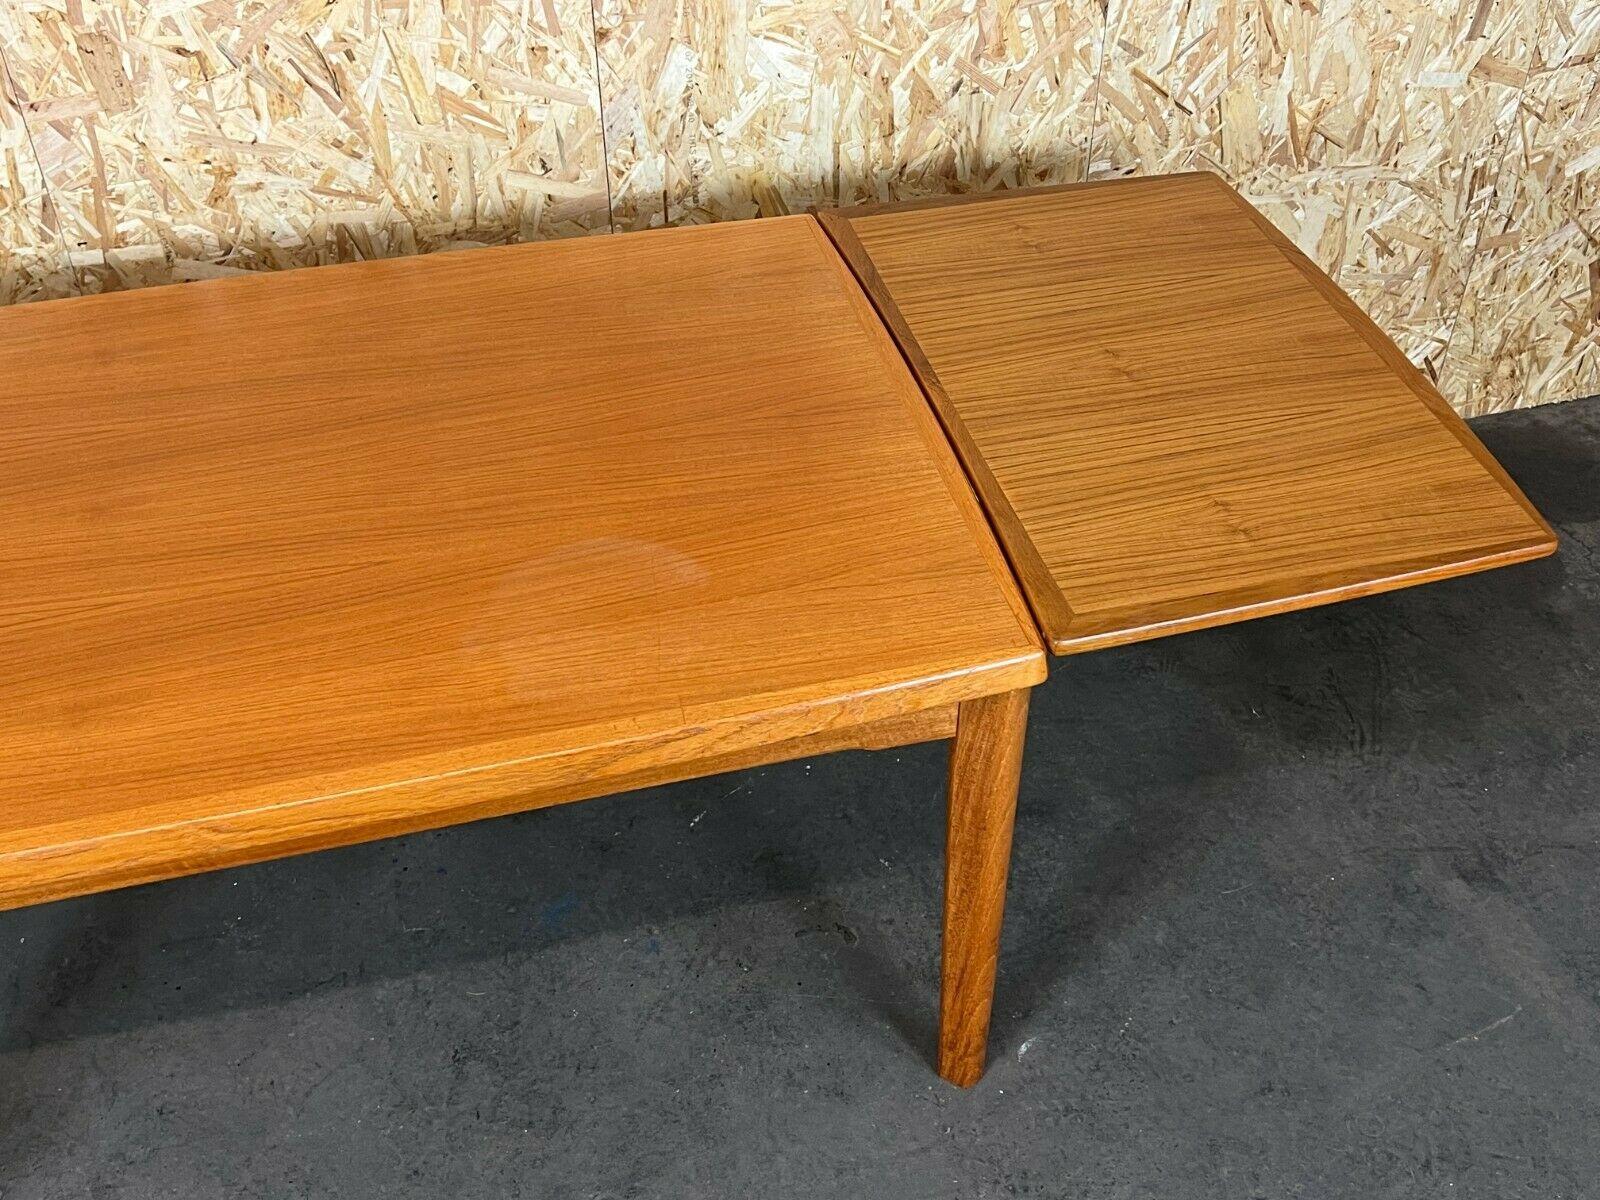 60s 70s Teak Coffee Table Danish Modern Design Denmark 60s For Sale 4